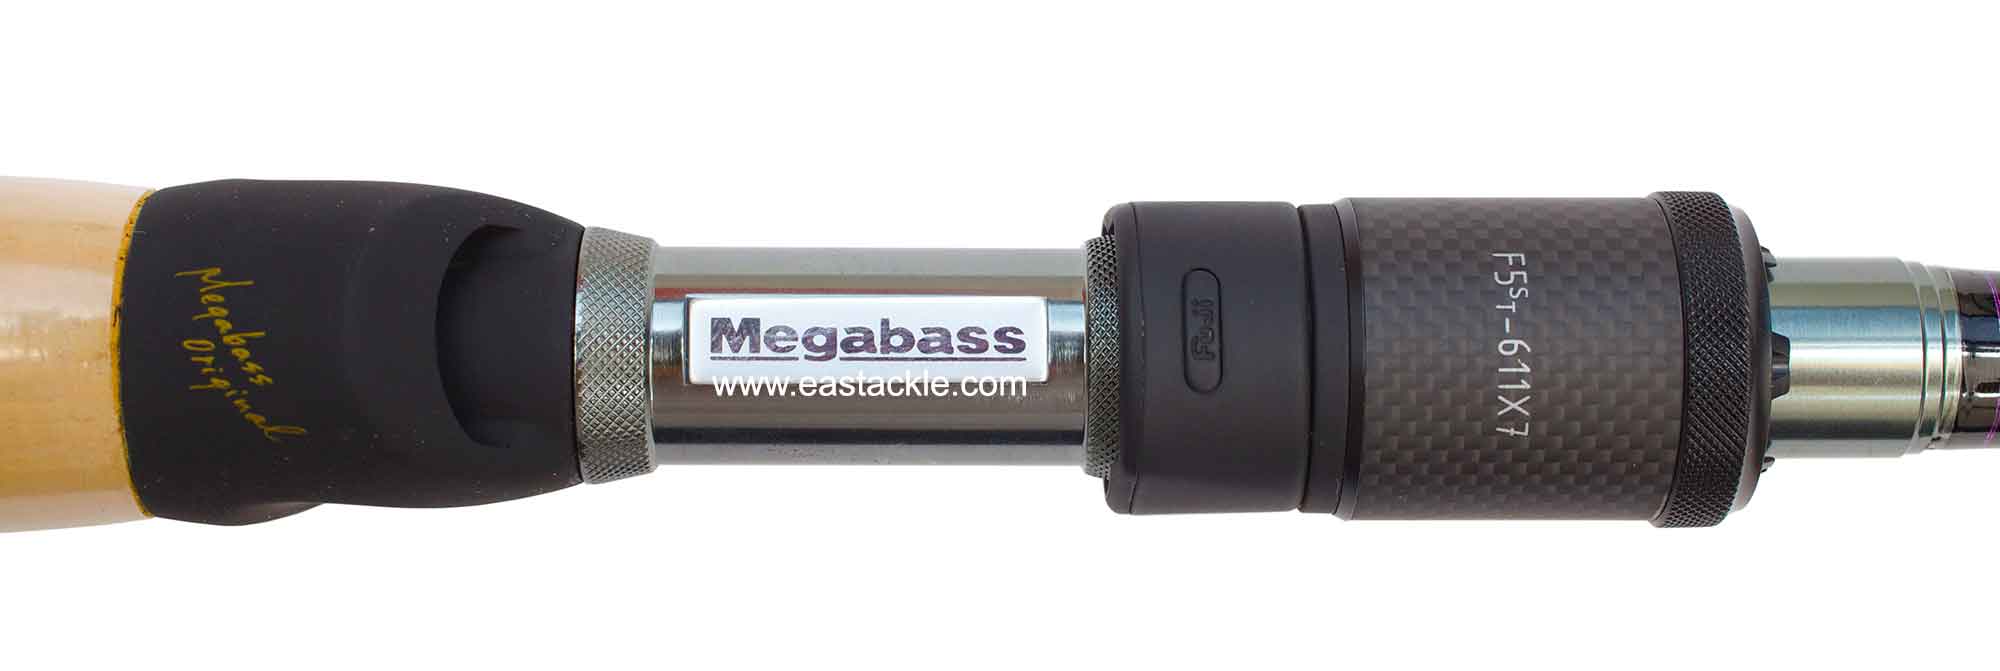 Megabass - Destroyer X7 - F5ST-611X7 - BEARINGDOWN TYPE-X - Bait Casting Rod - Reel Seat Section (Top View)